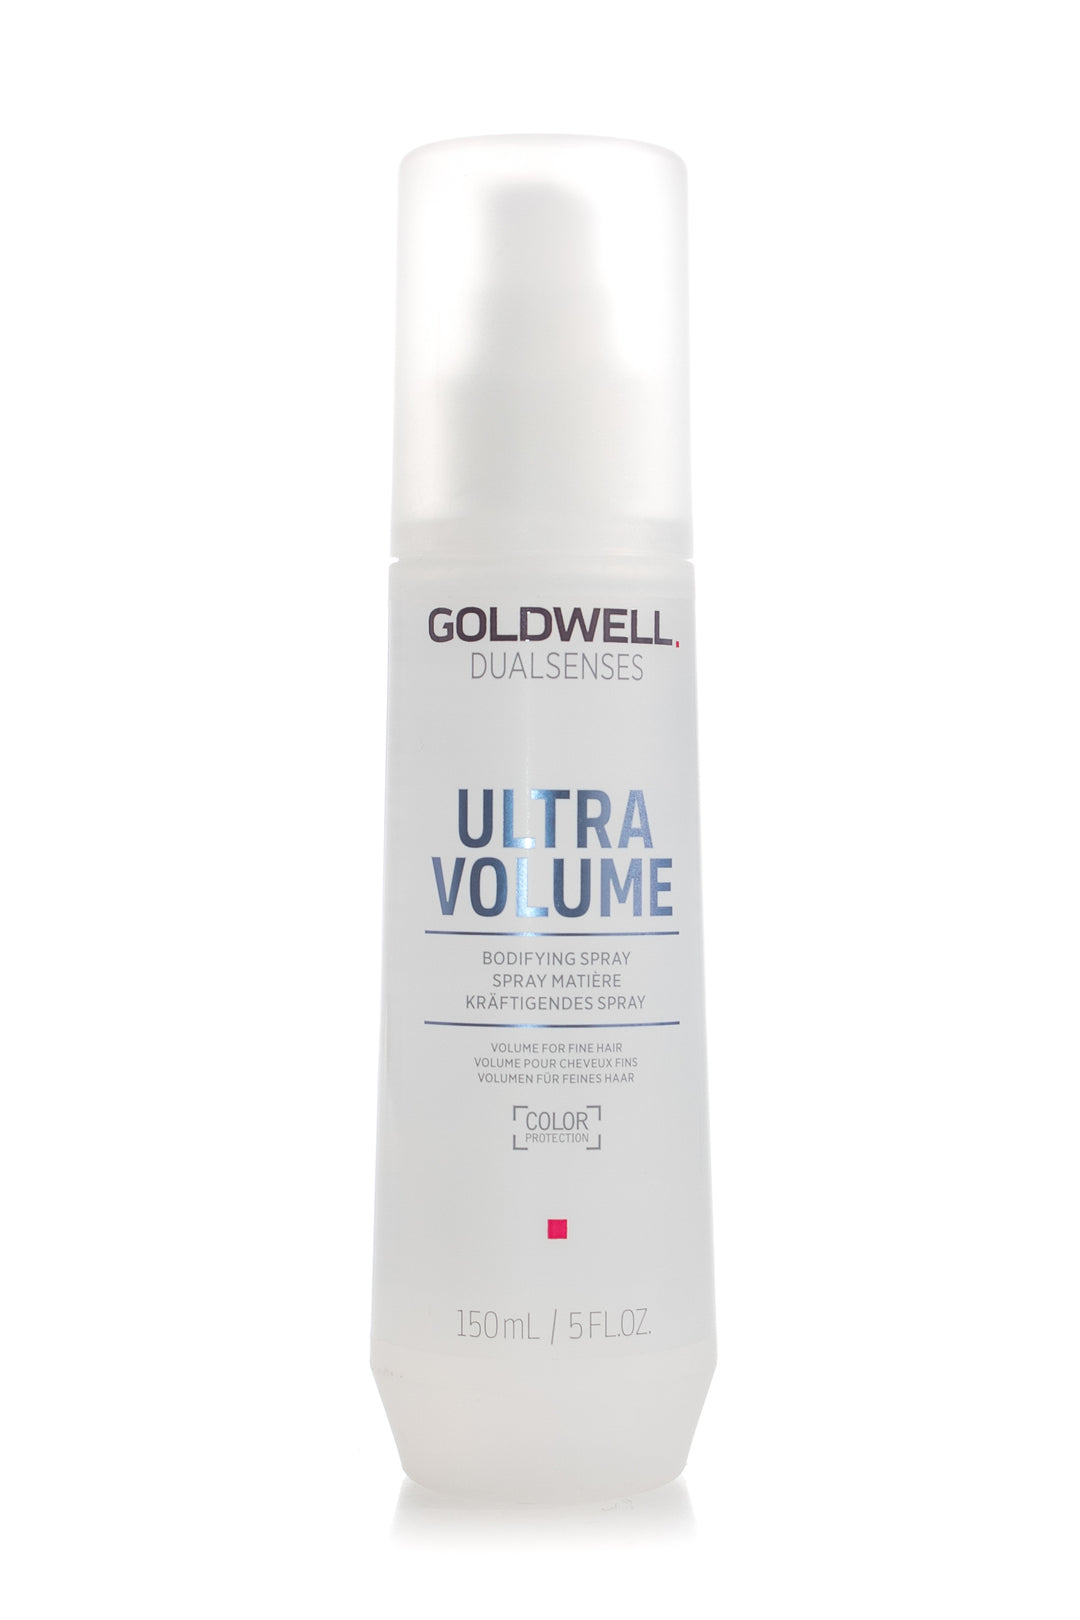 Product Image: Goldwell Ultra Volume Bodifying Spray - 150ml